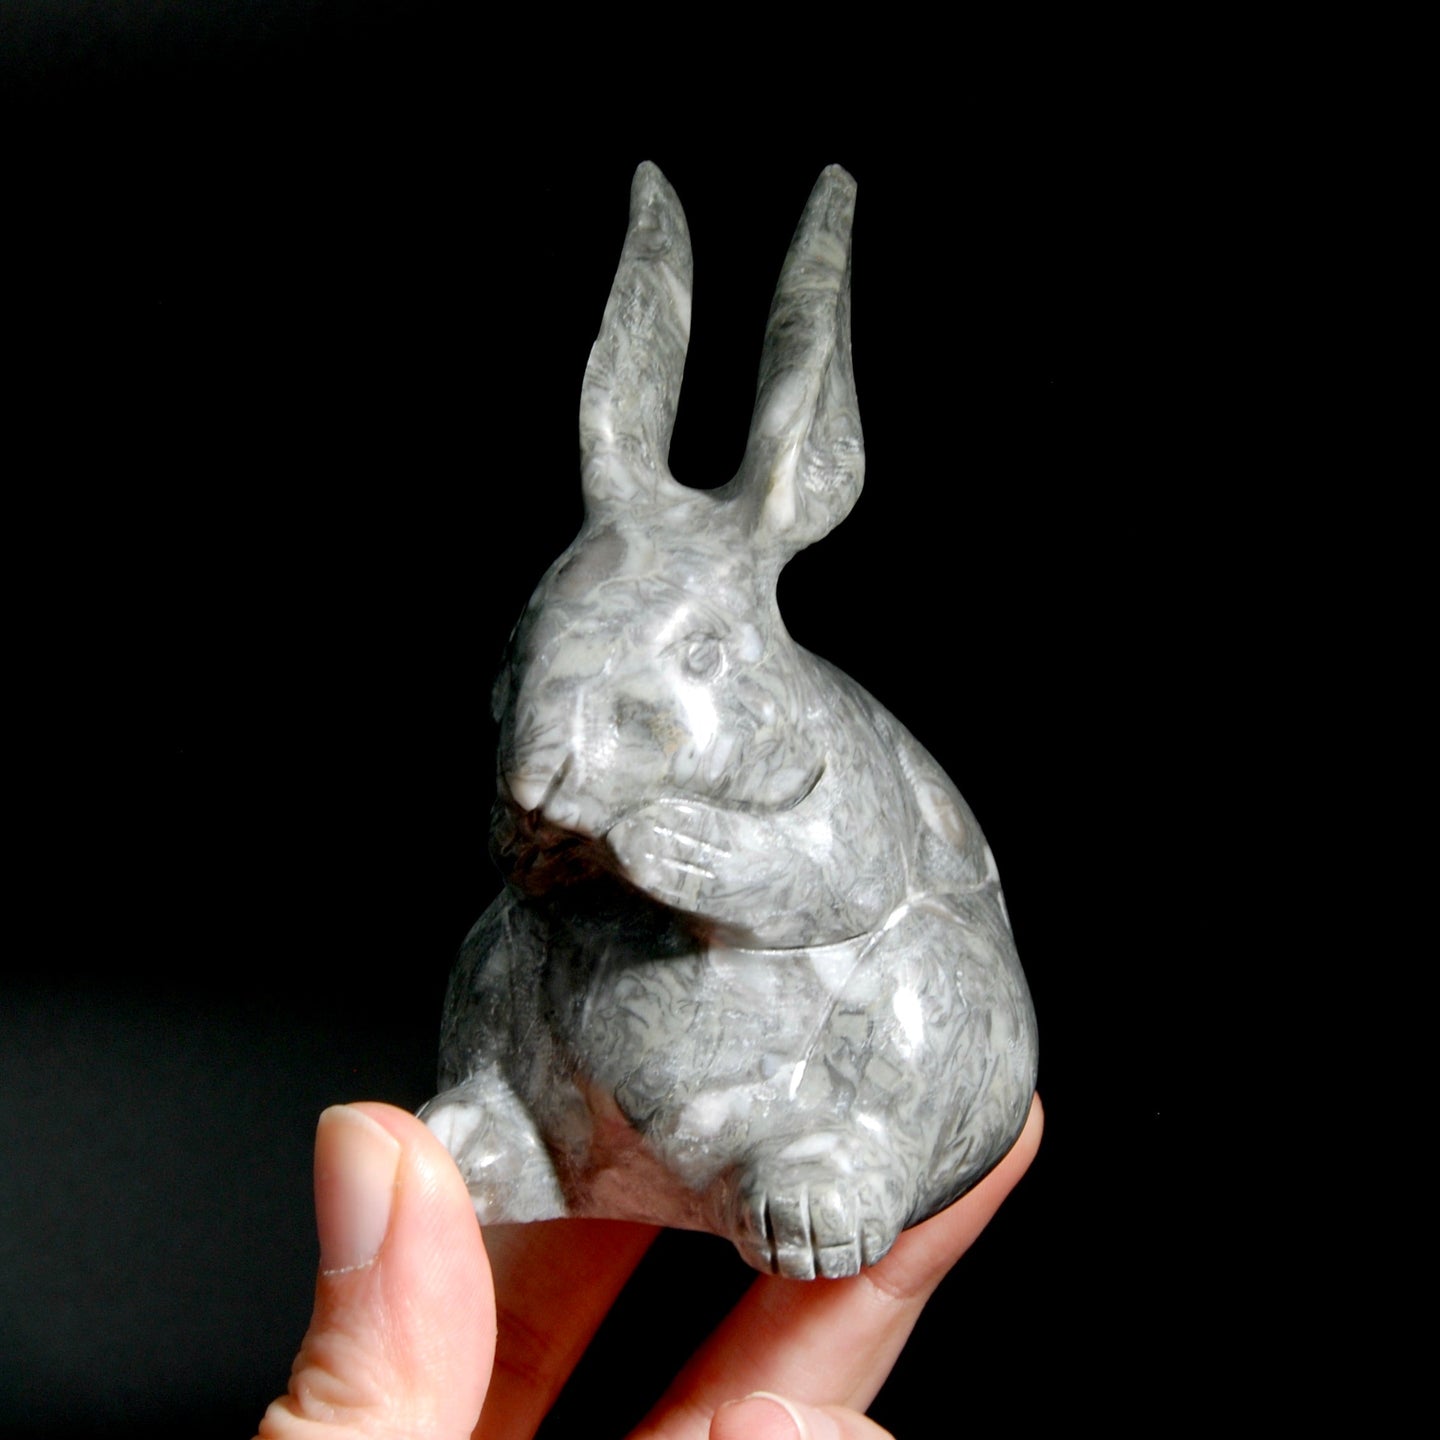 Grey Jade Rabbit Crystal Carving